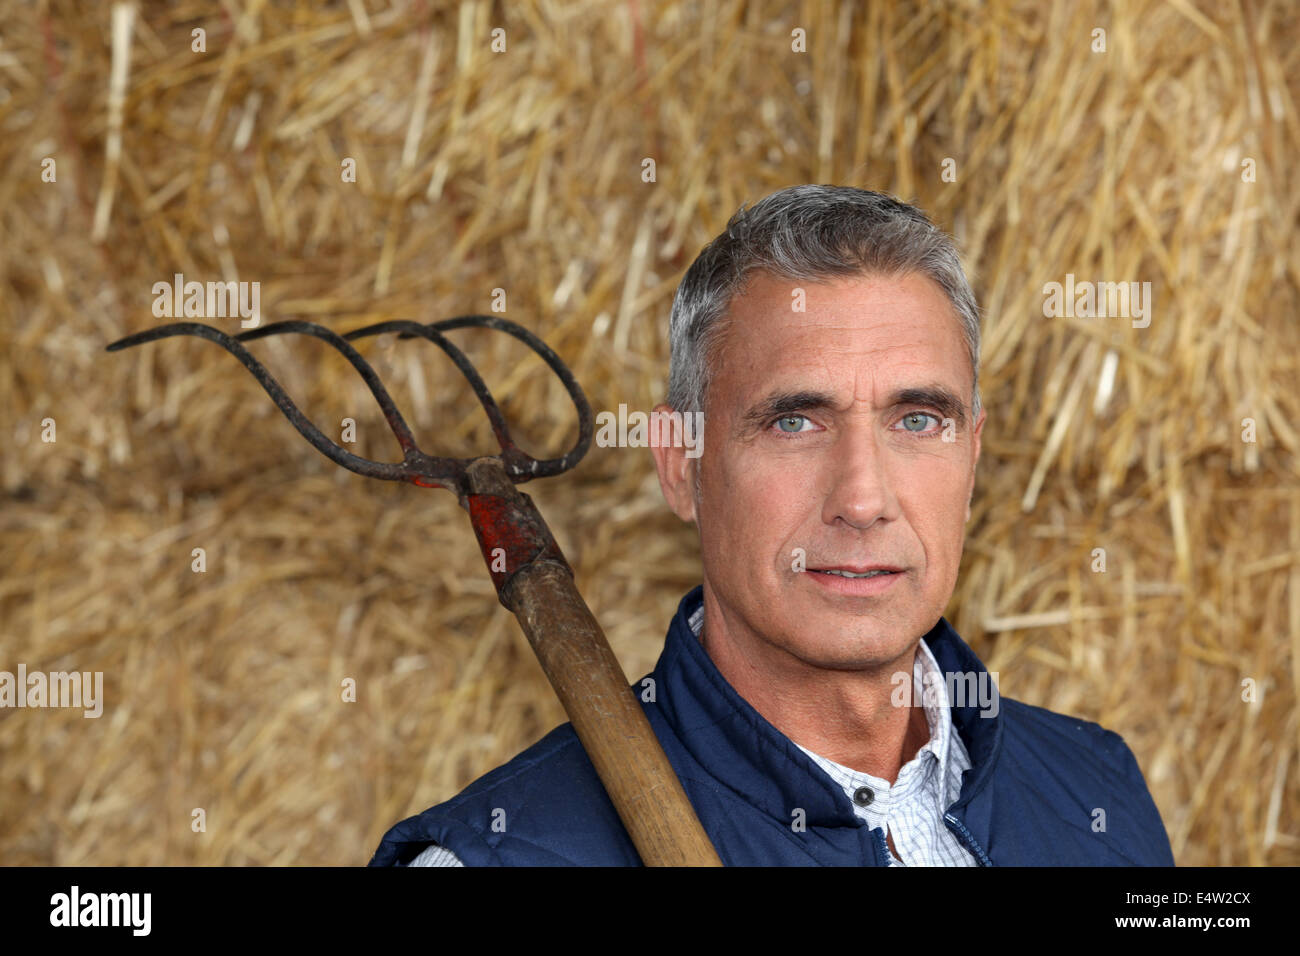 Farmer holding a pitchfork Stock Photo